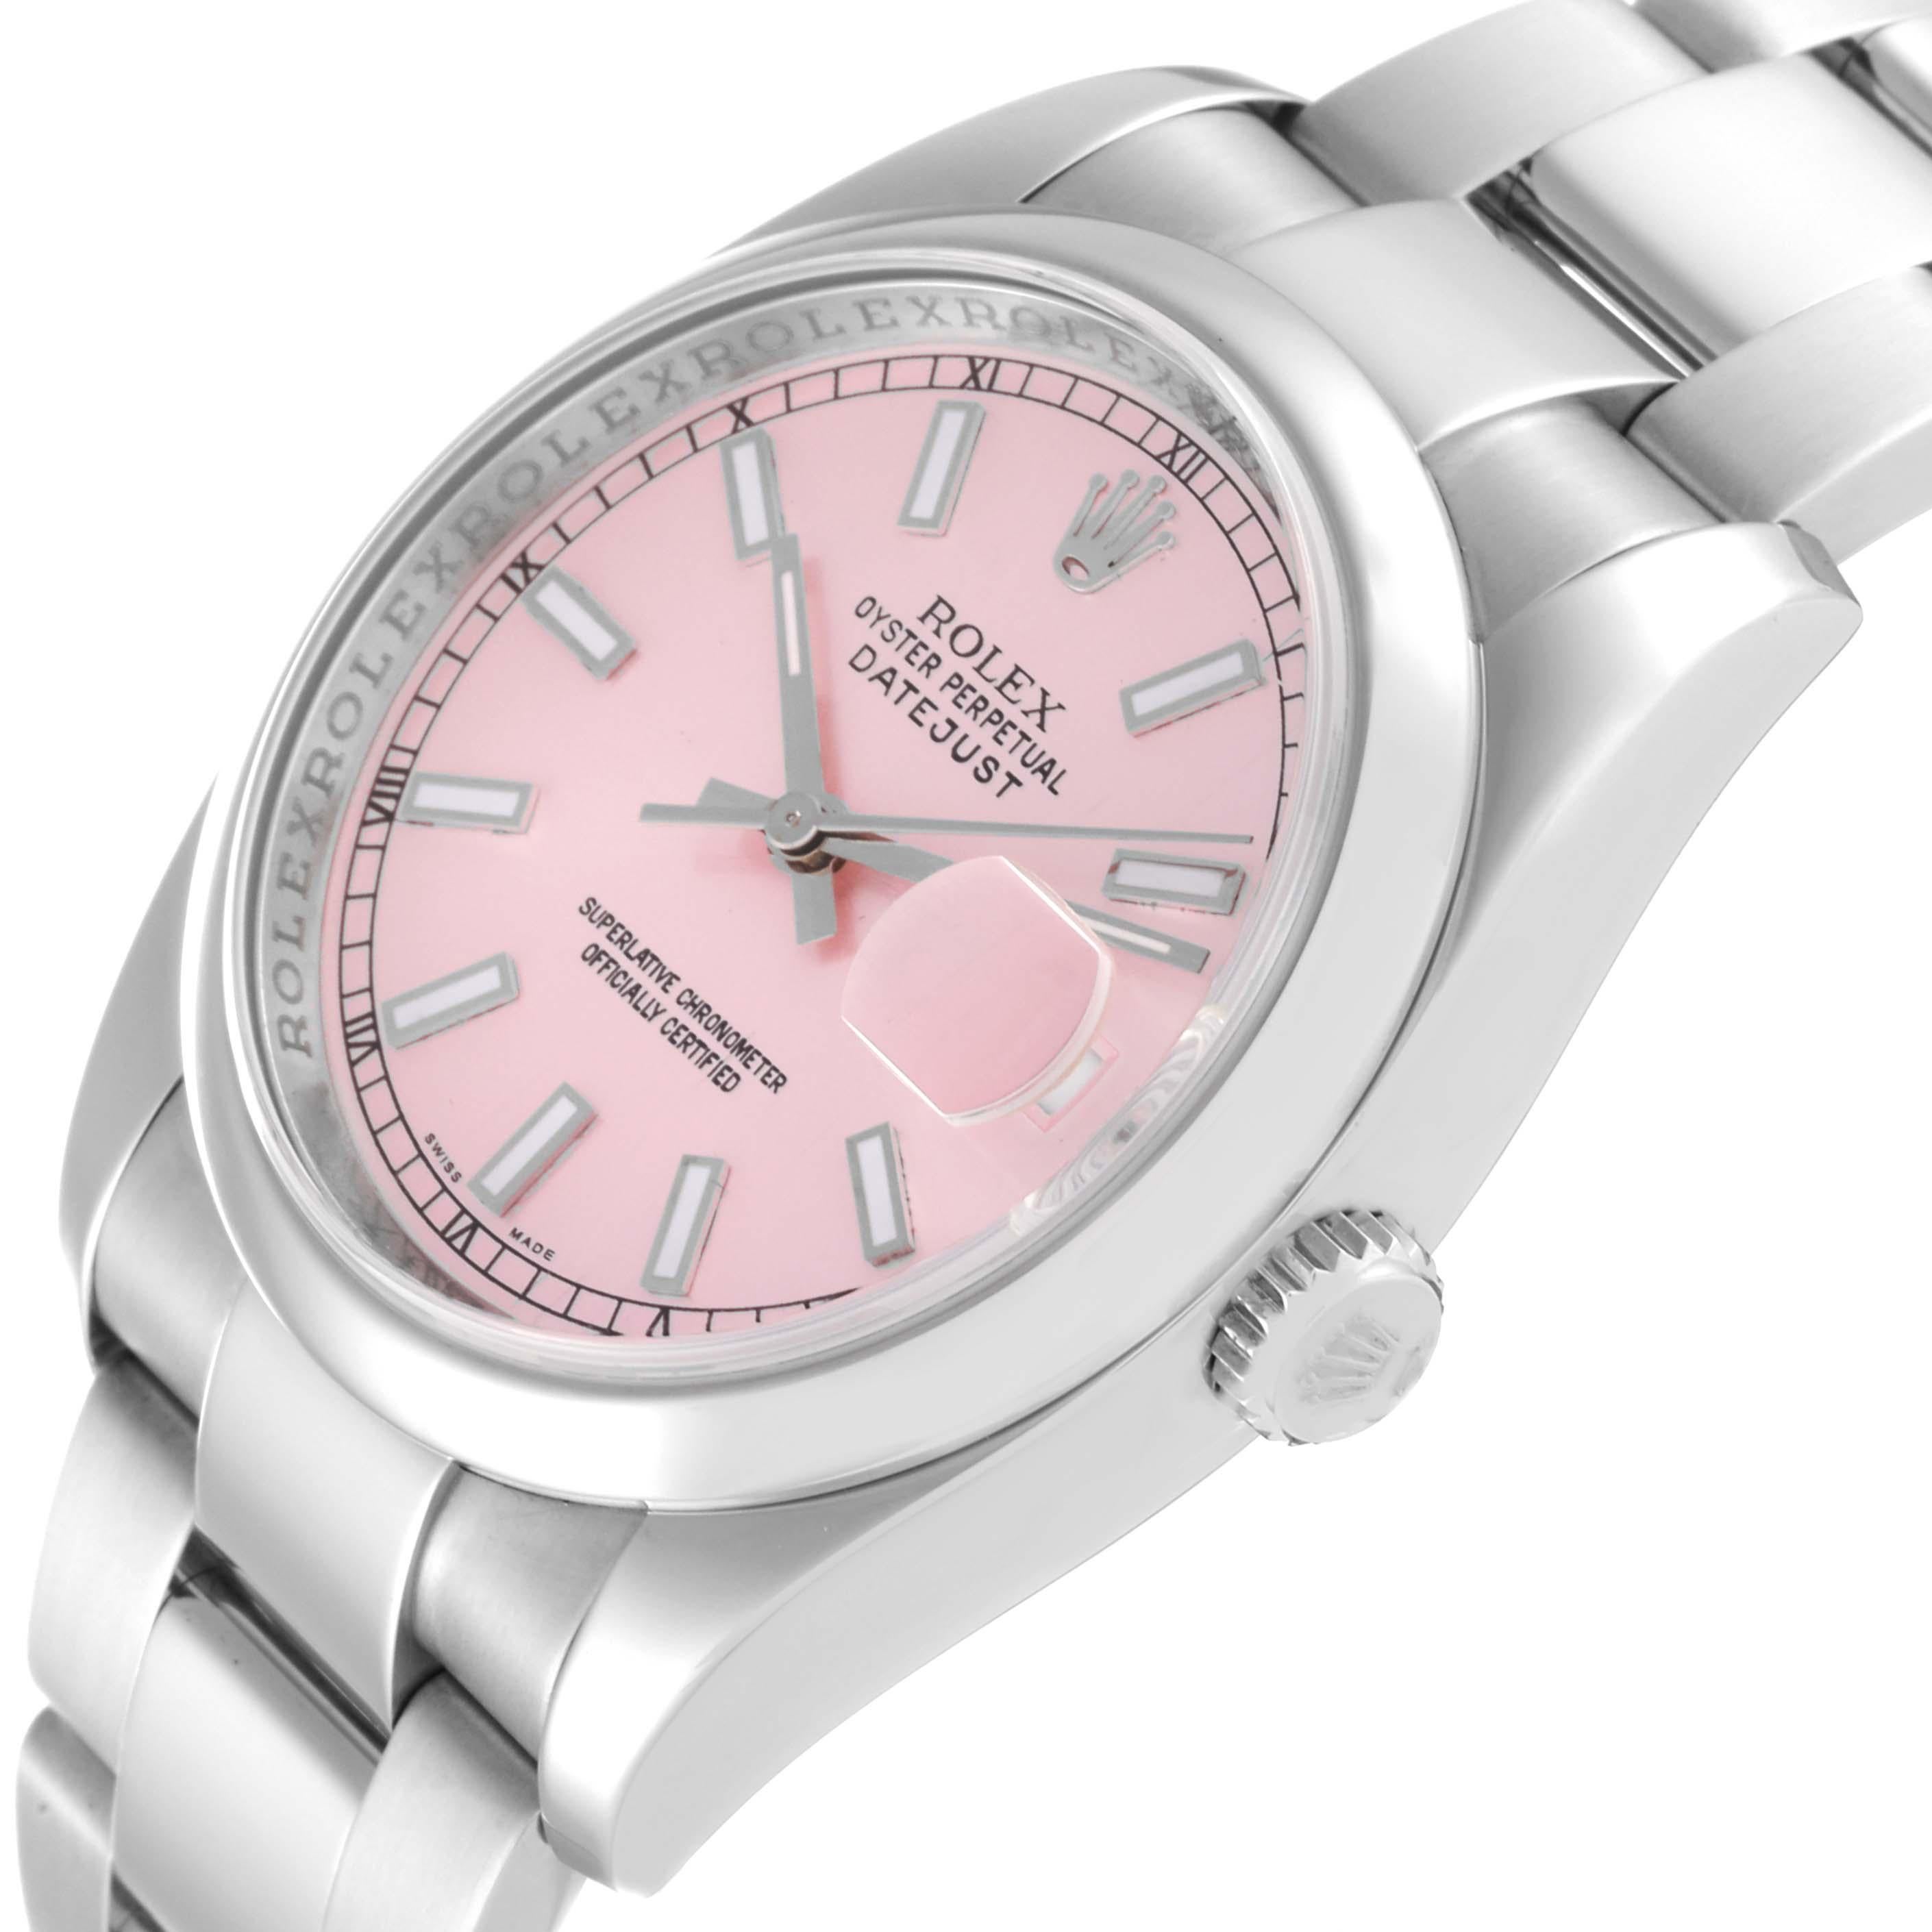 Rolex Datejust 36 Pink Baton Dial Steel Mens Watch 116200 1